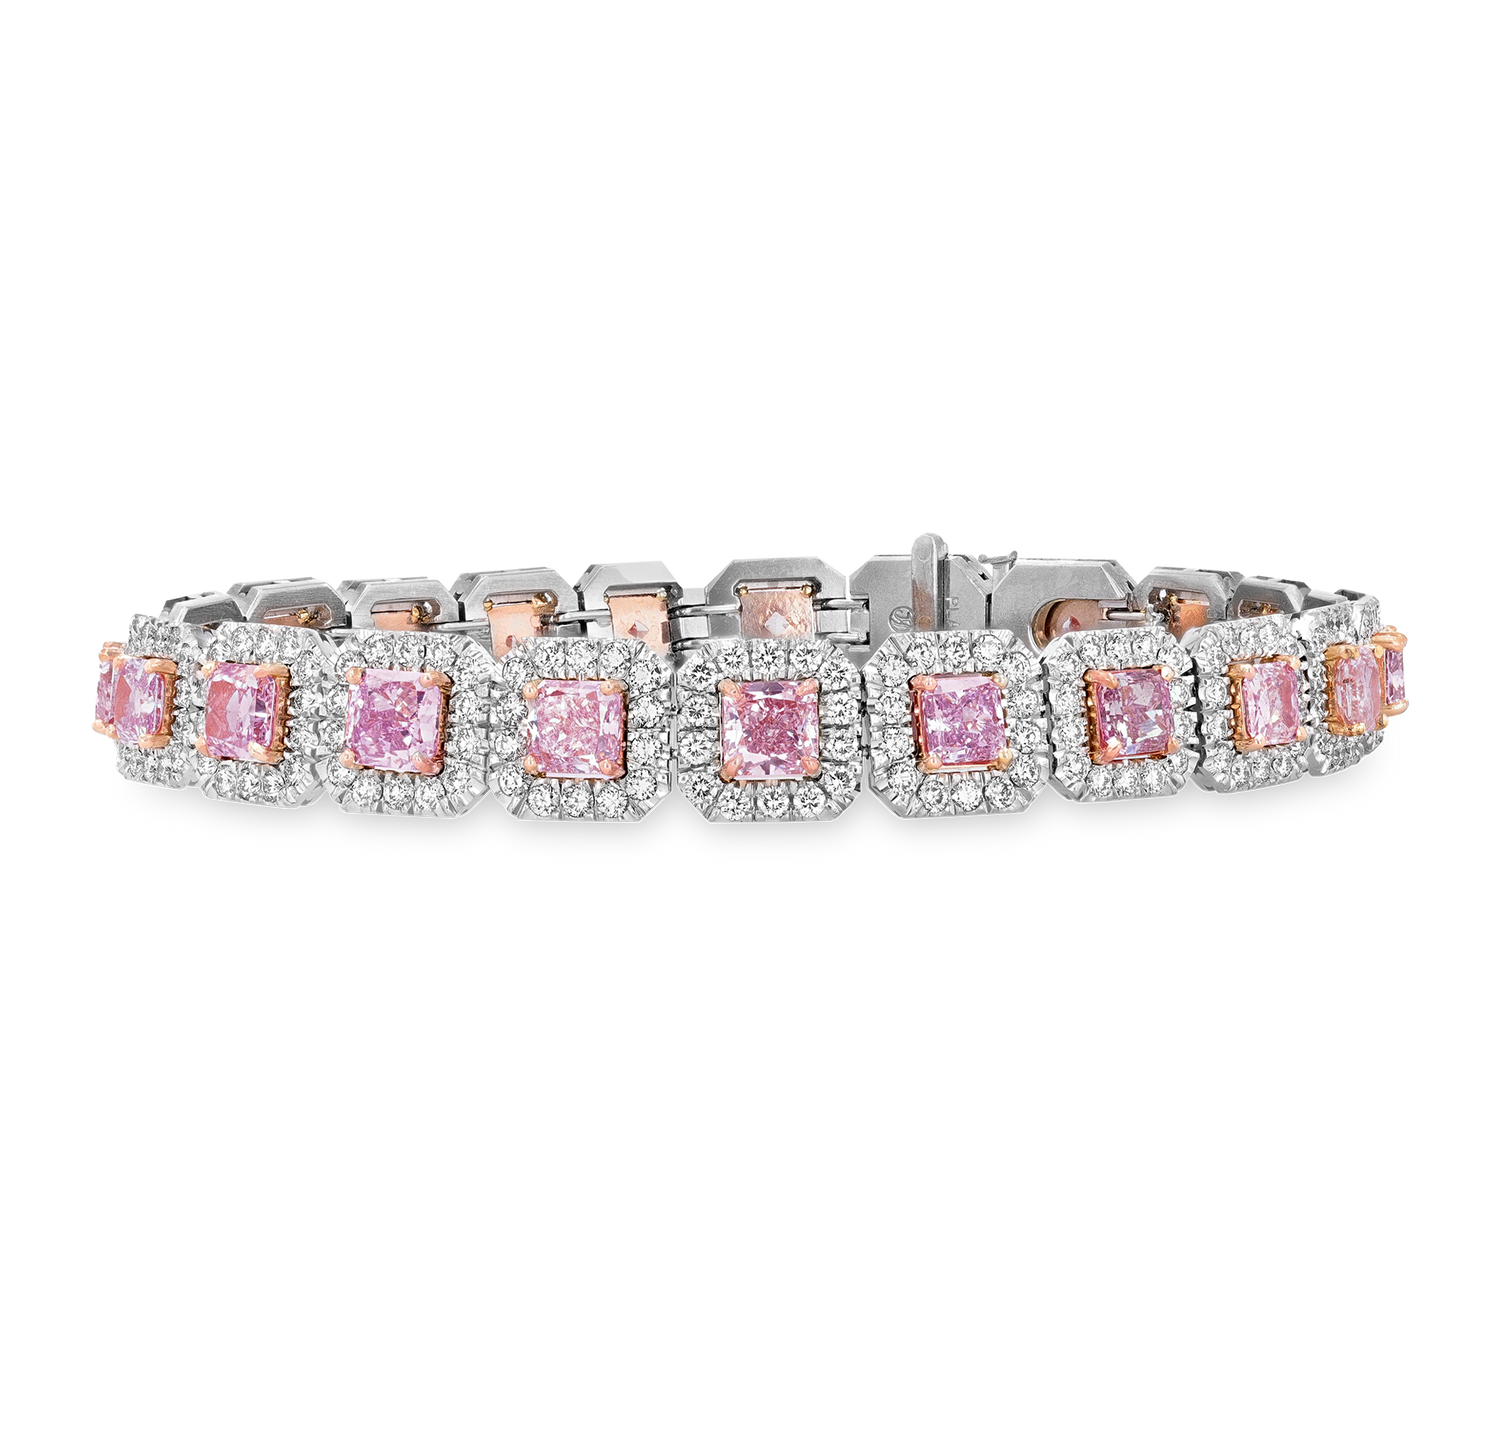 Natural Fancy Pink Diamond Bracelet, 6.47 carats